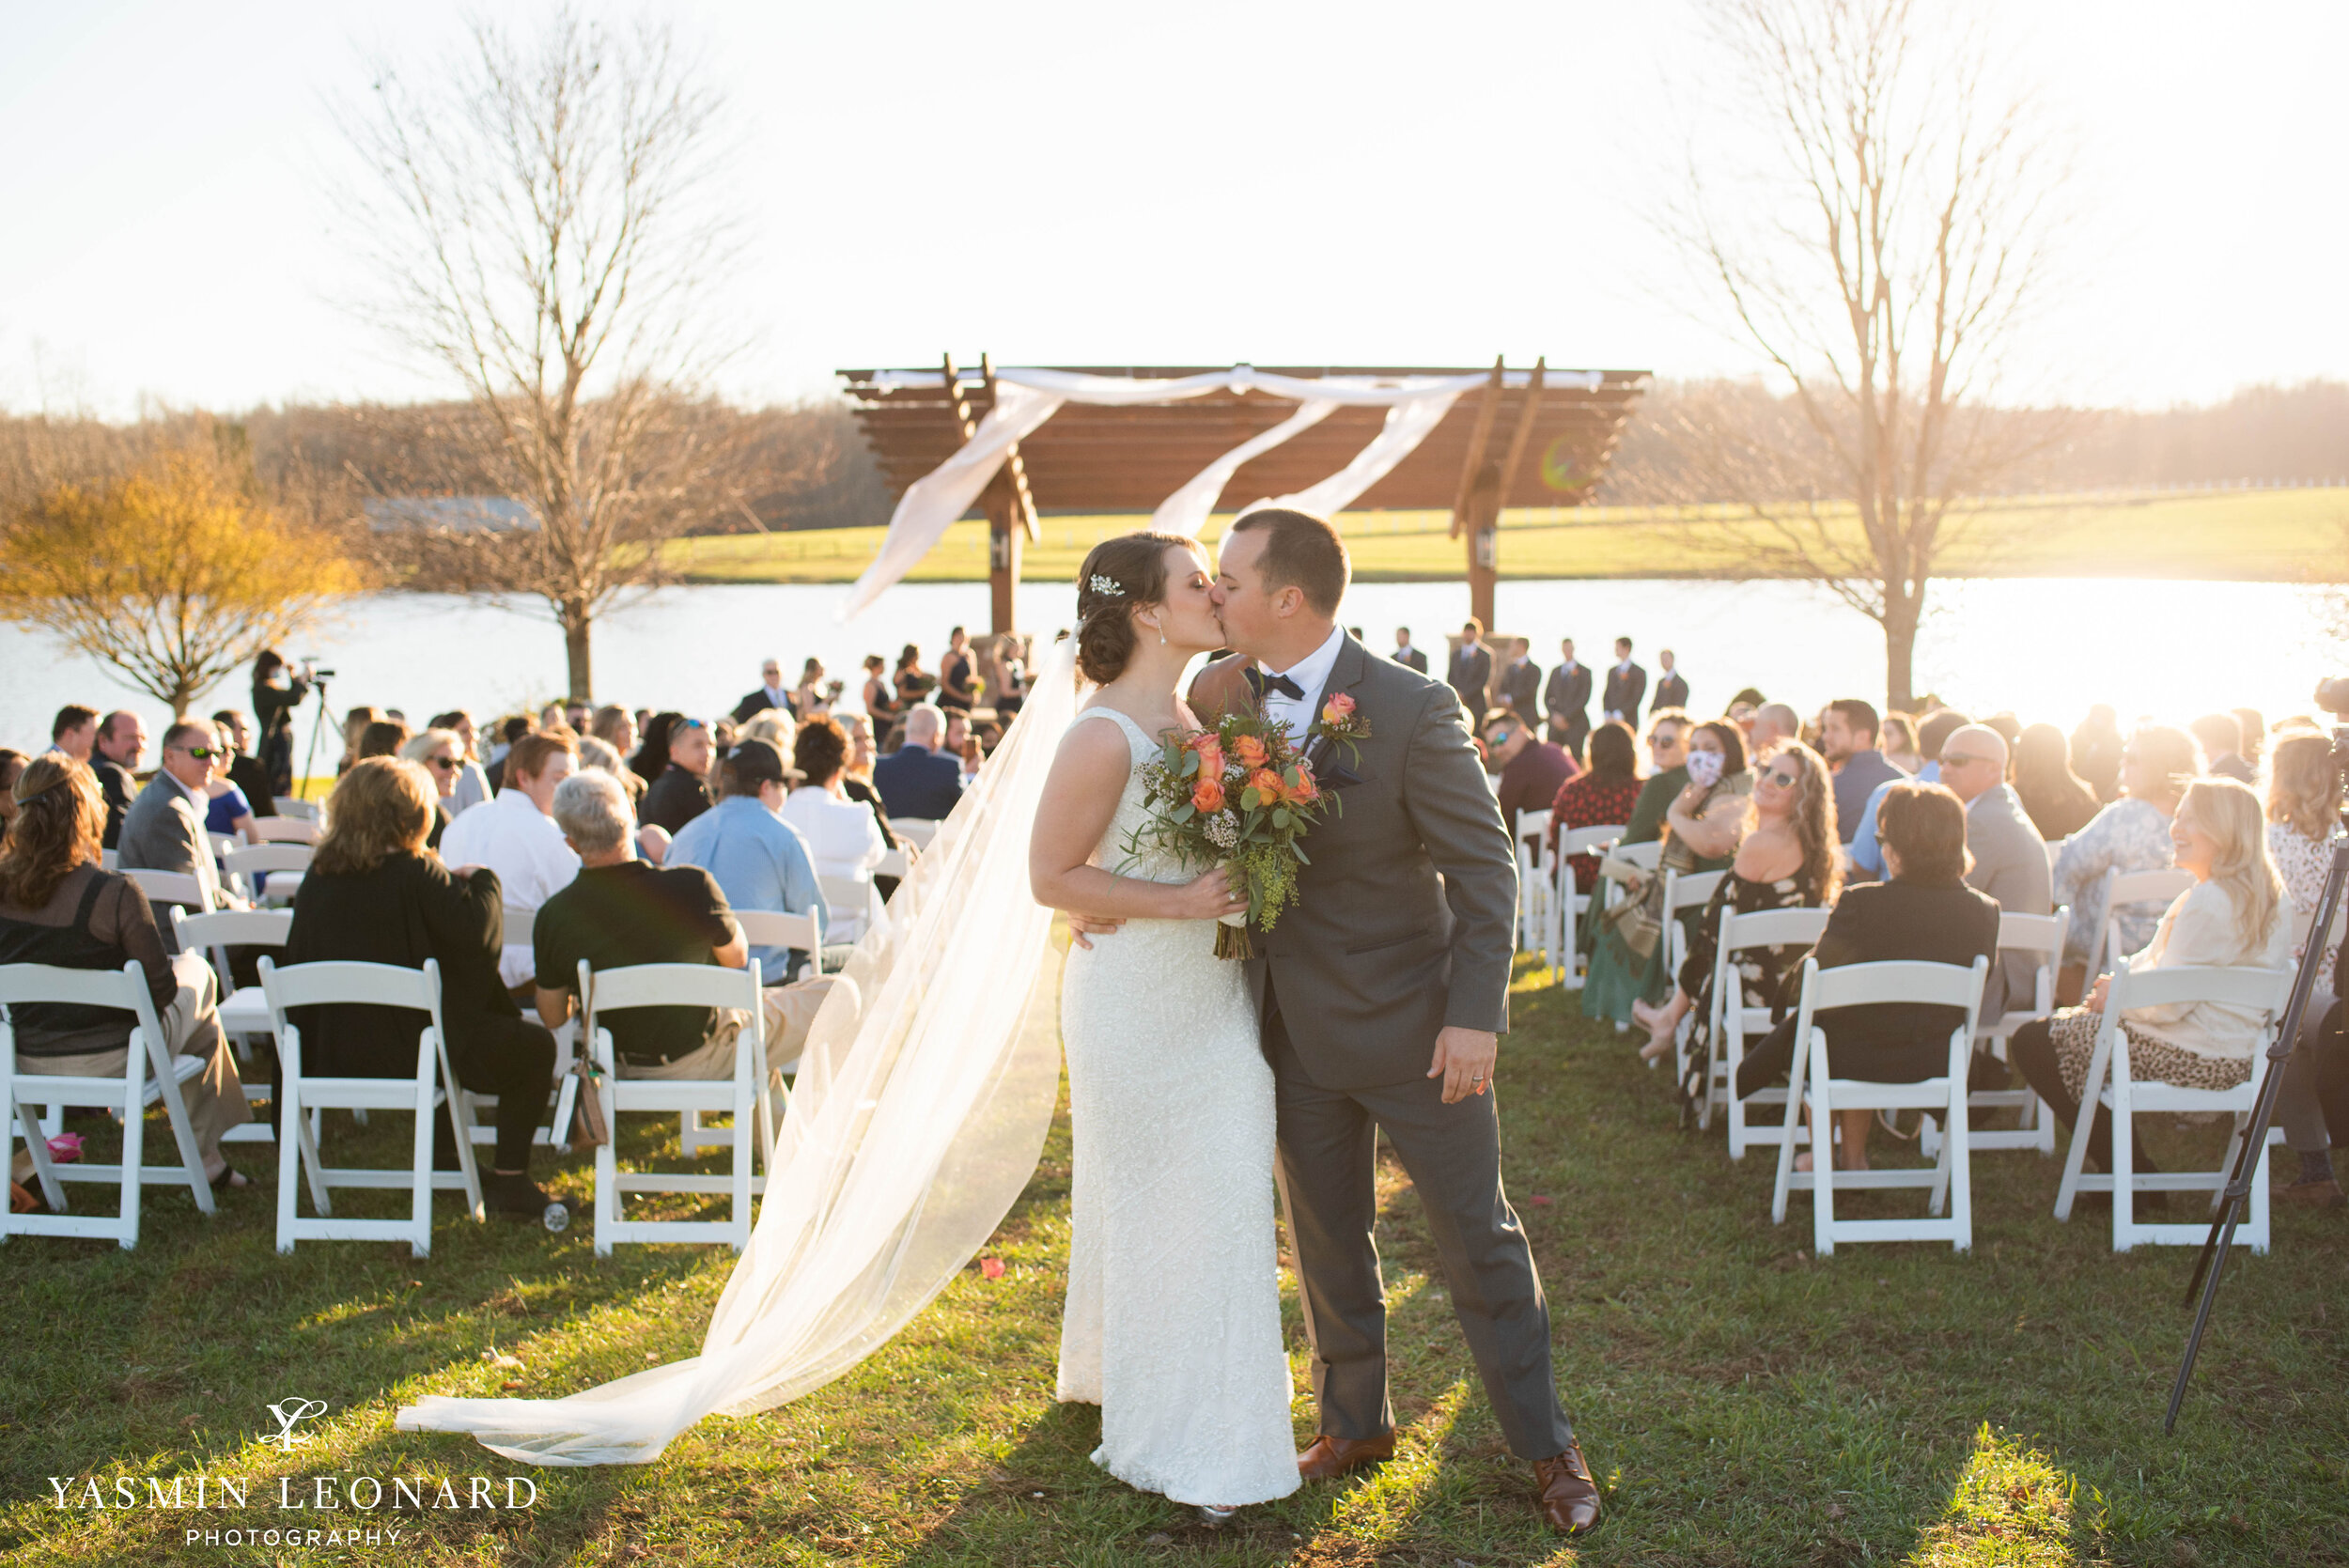 Jared and Katy - Adaumont Farms - High Point Weddings - NC Barn Weddings - Yasmin Leonard Photography-27.jpg